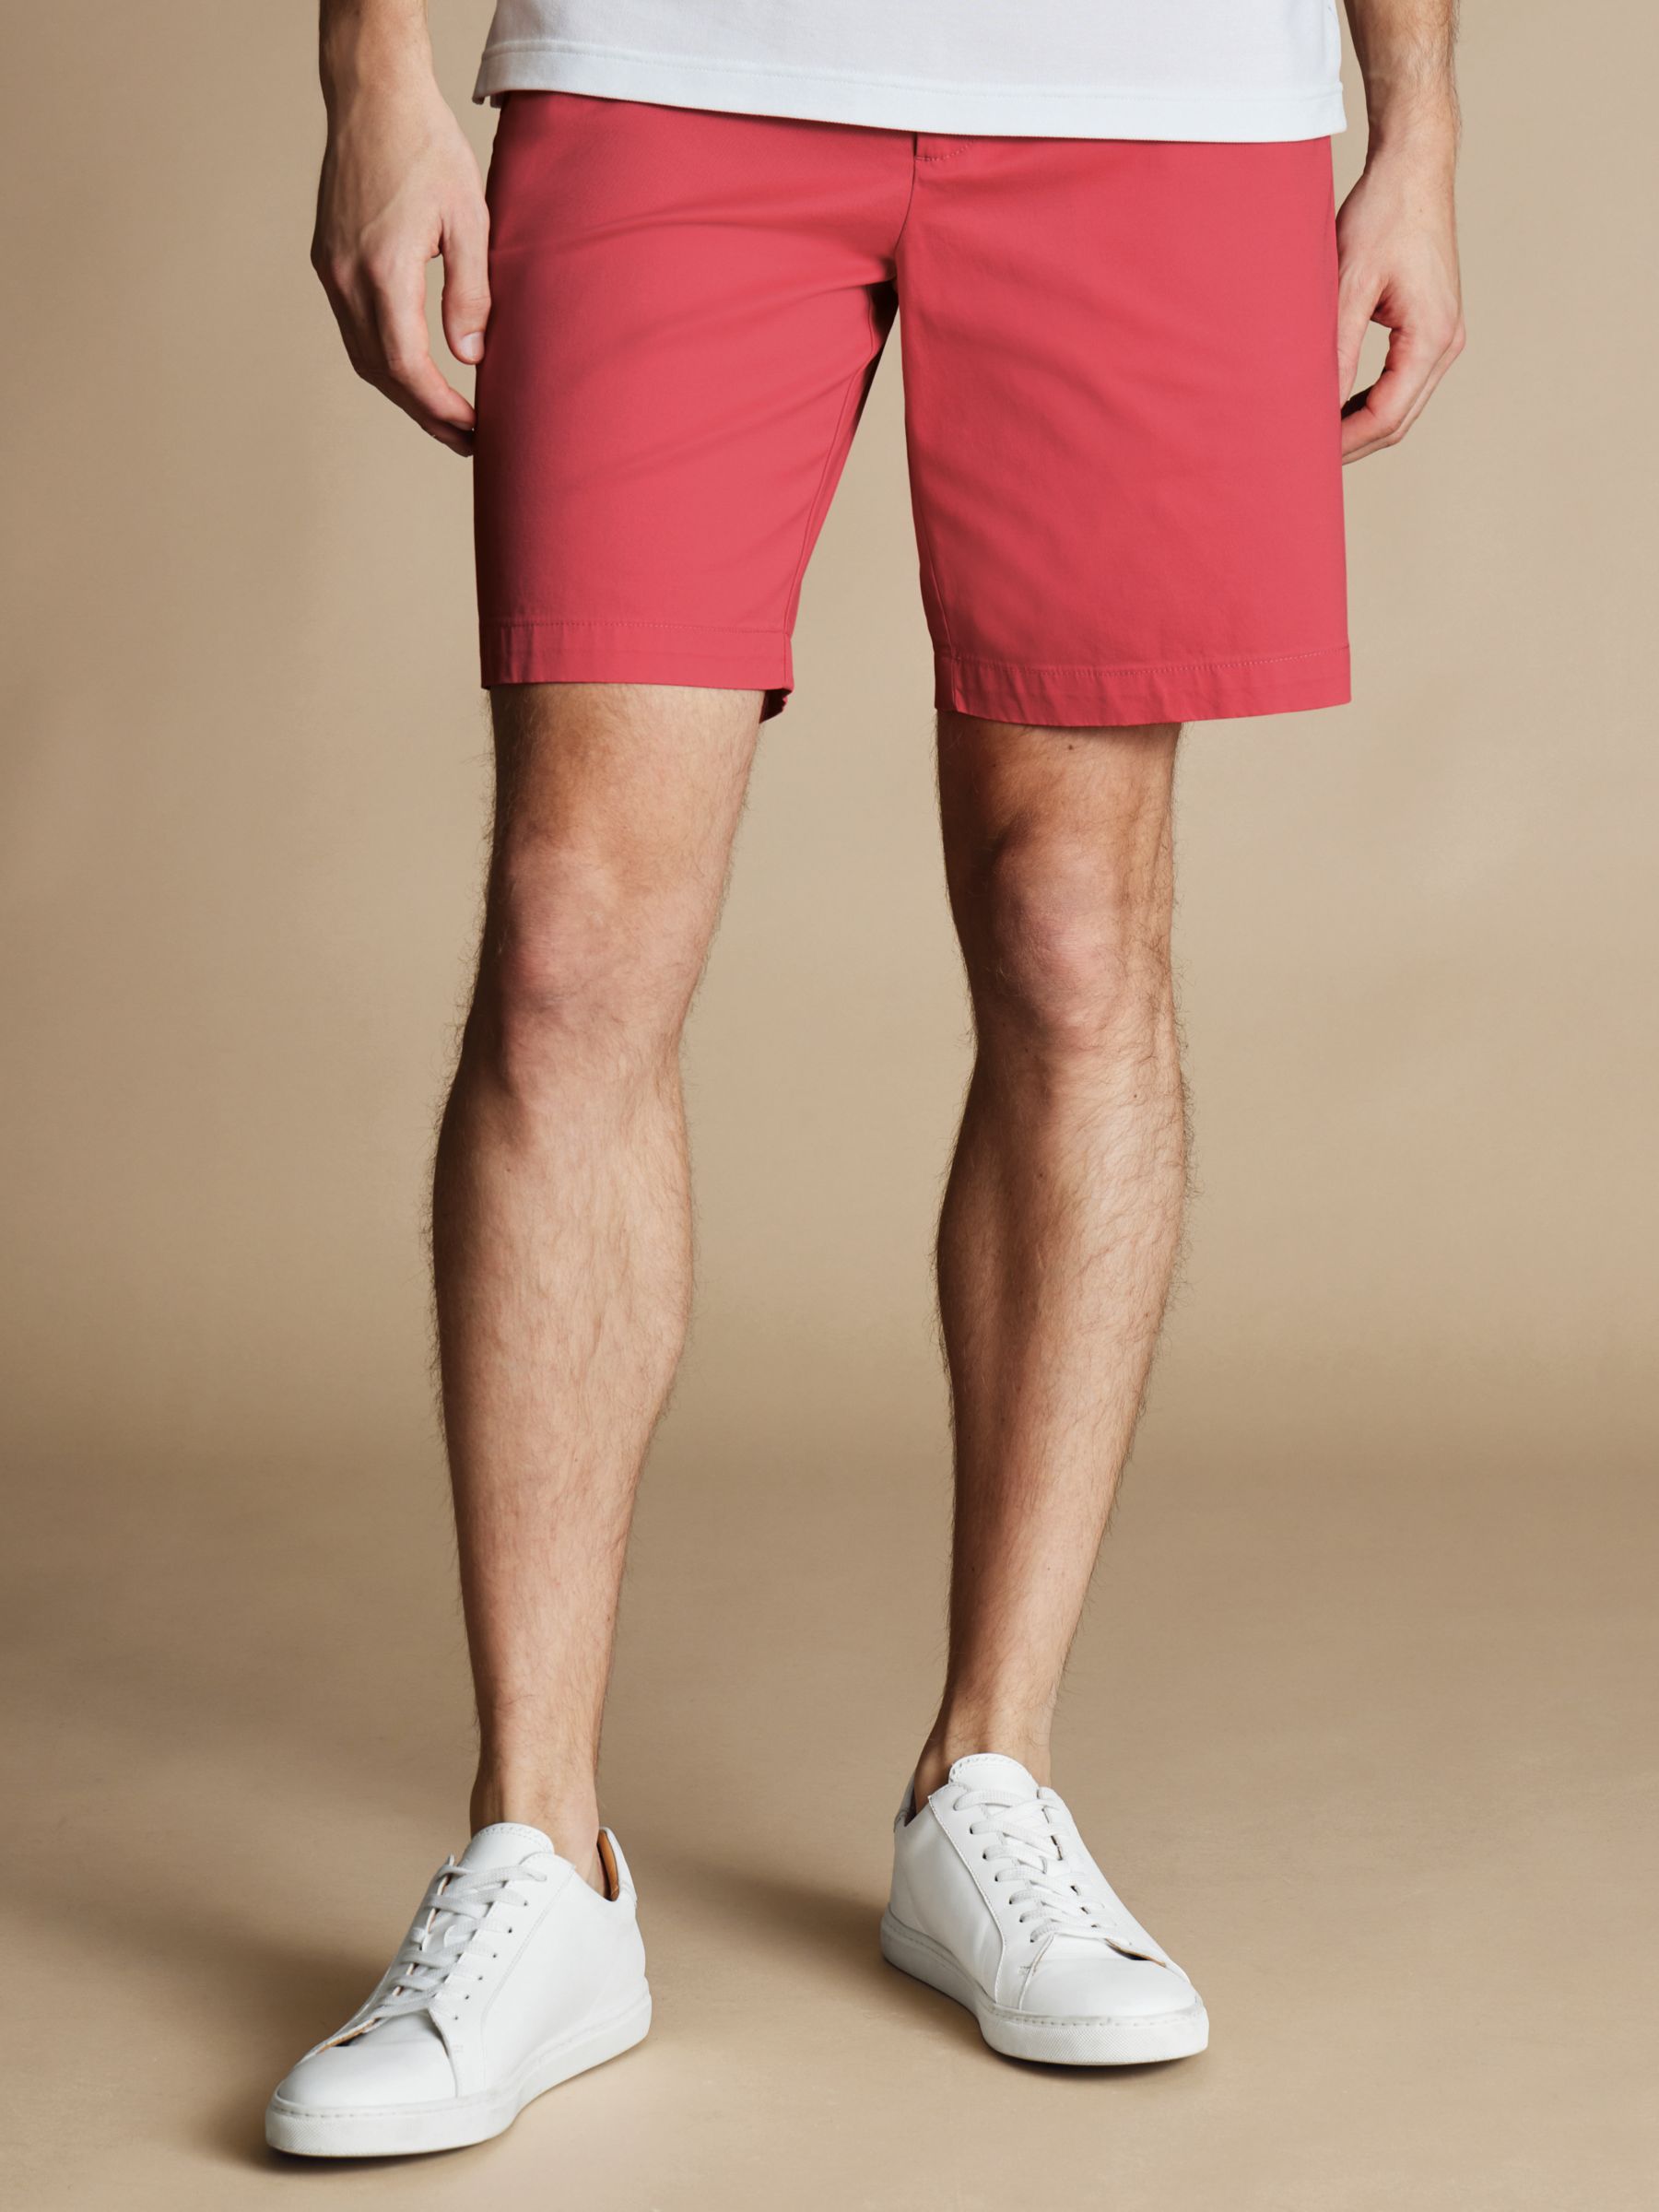 Charles Tyrwhitt Slim Fit Cotton Blend Shorts, Coral Pink, 30